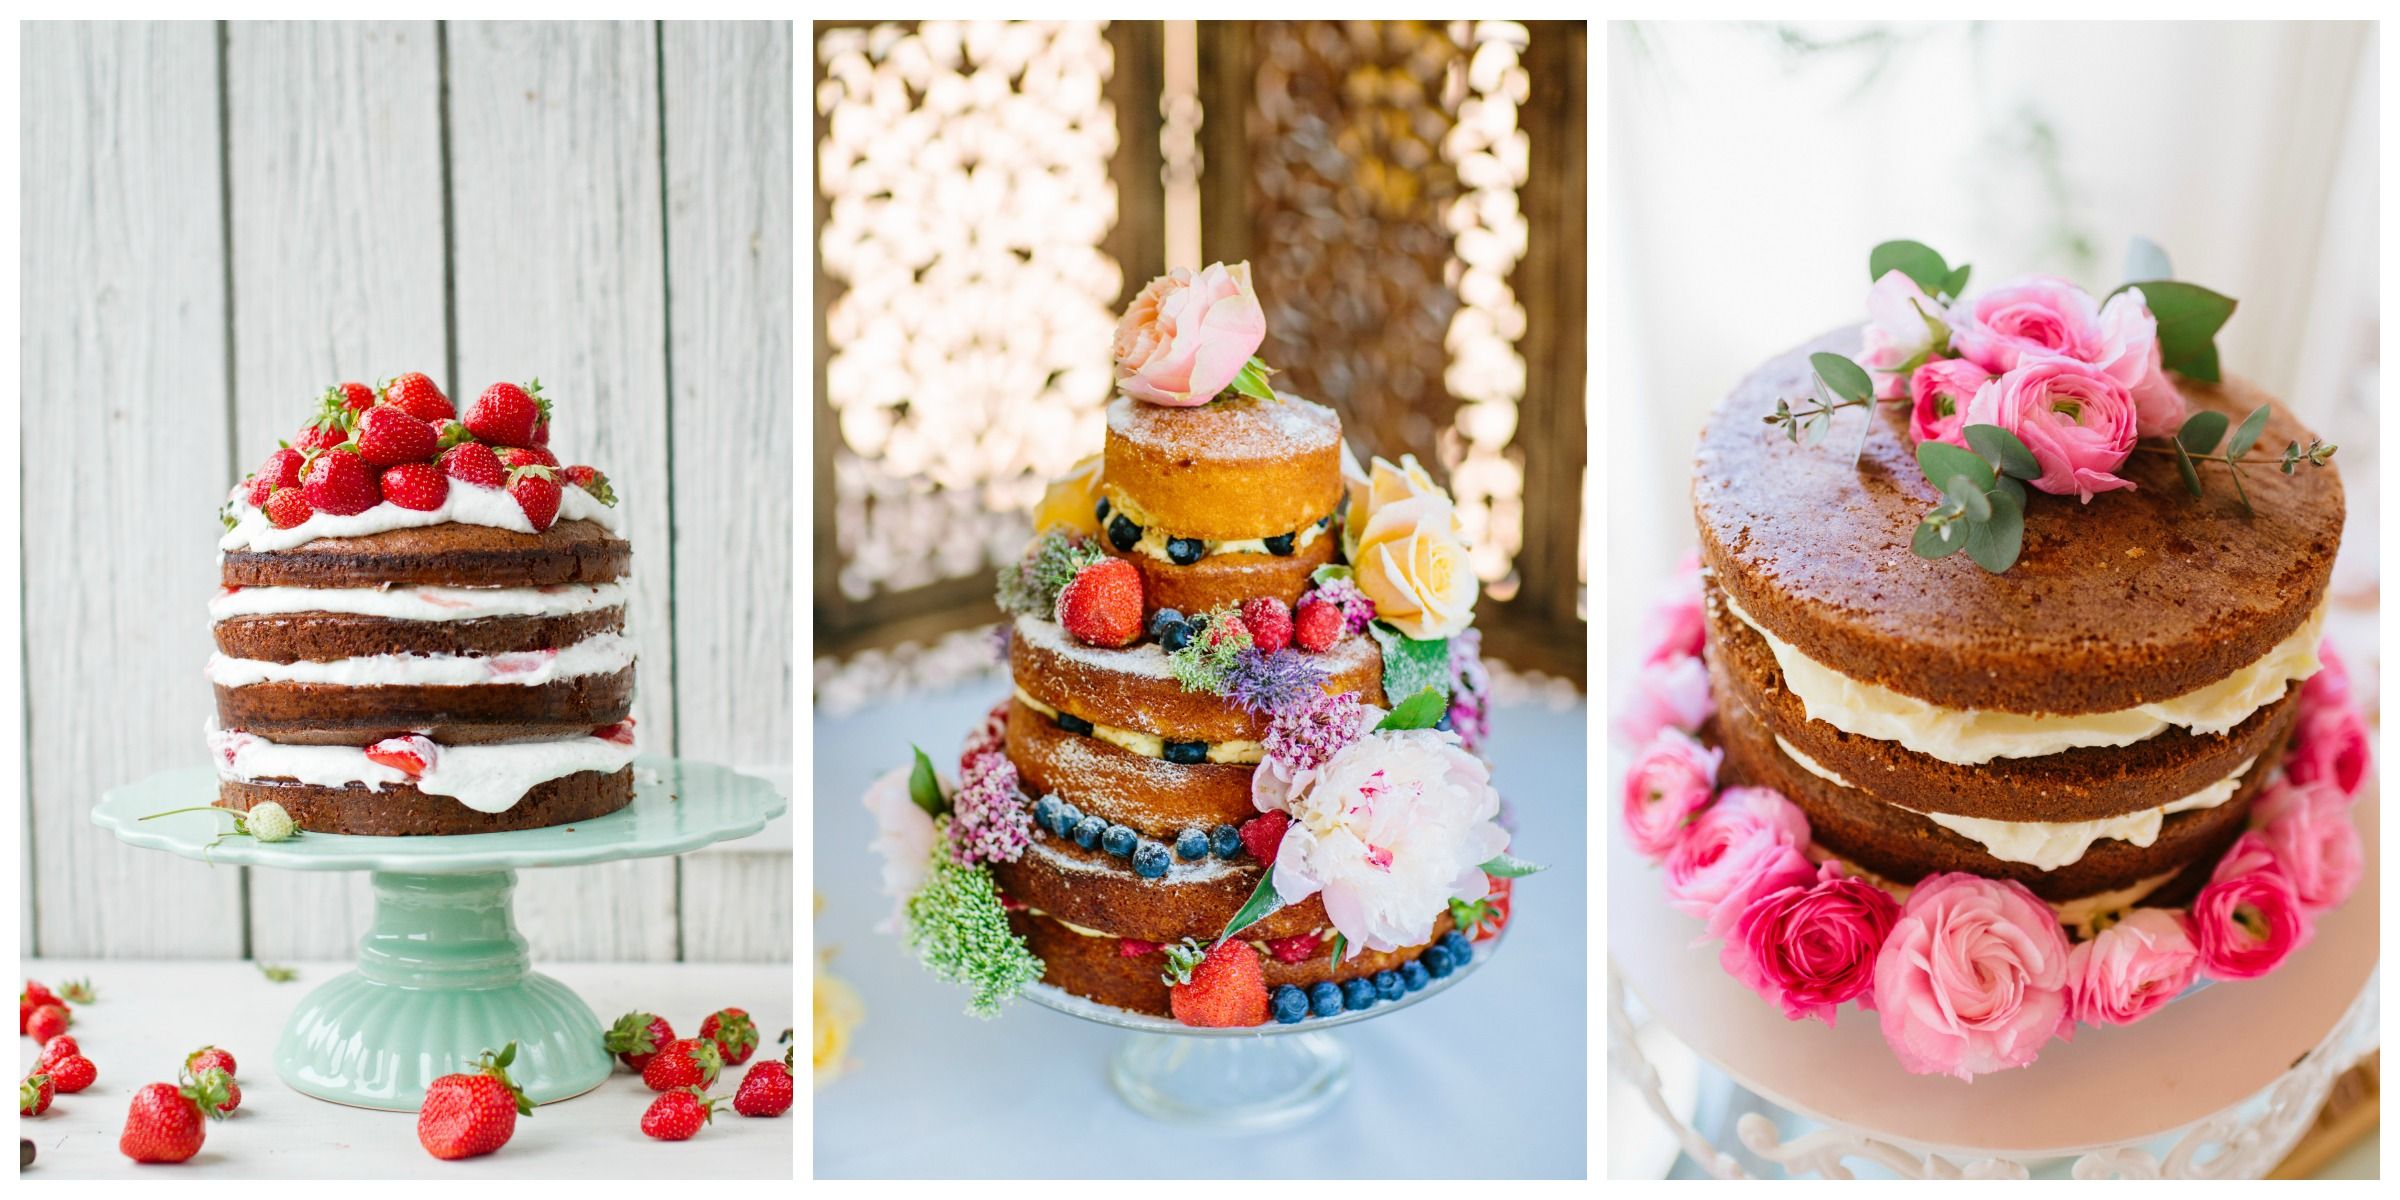 8 Extraordinary Wedding Cake Designs | WeddingDresses